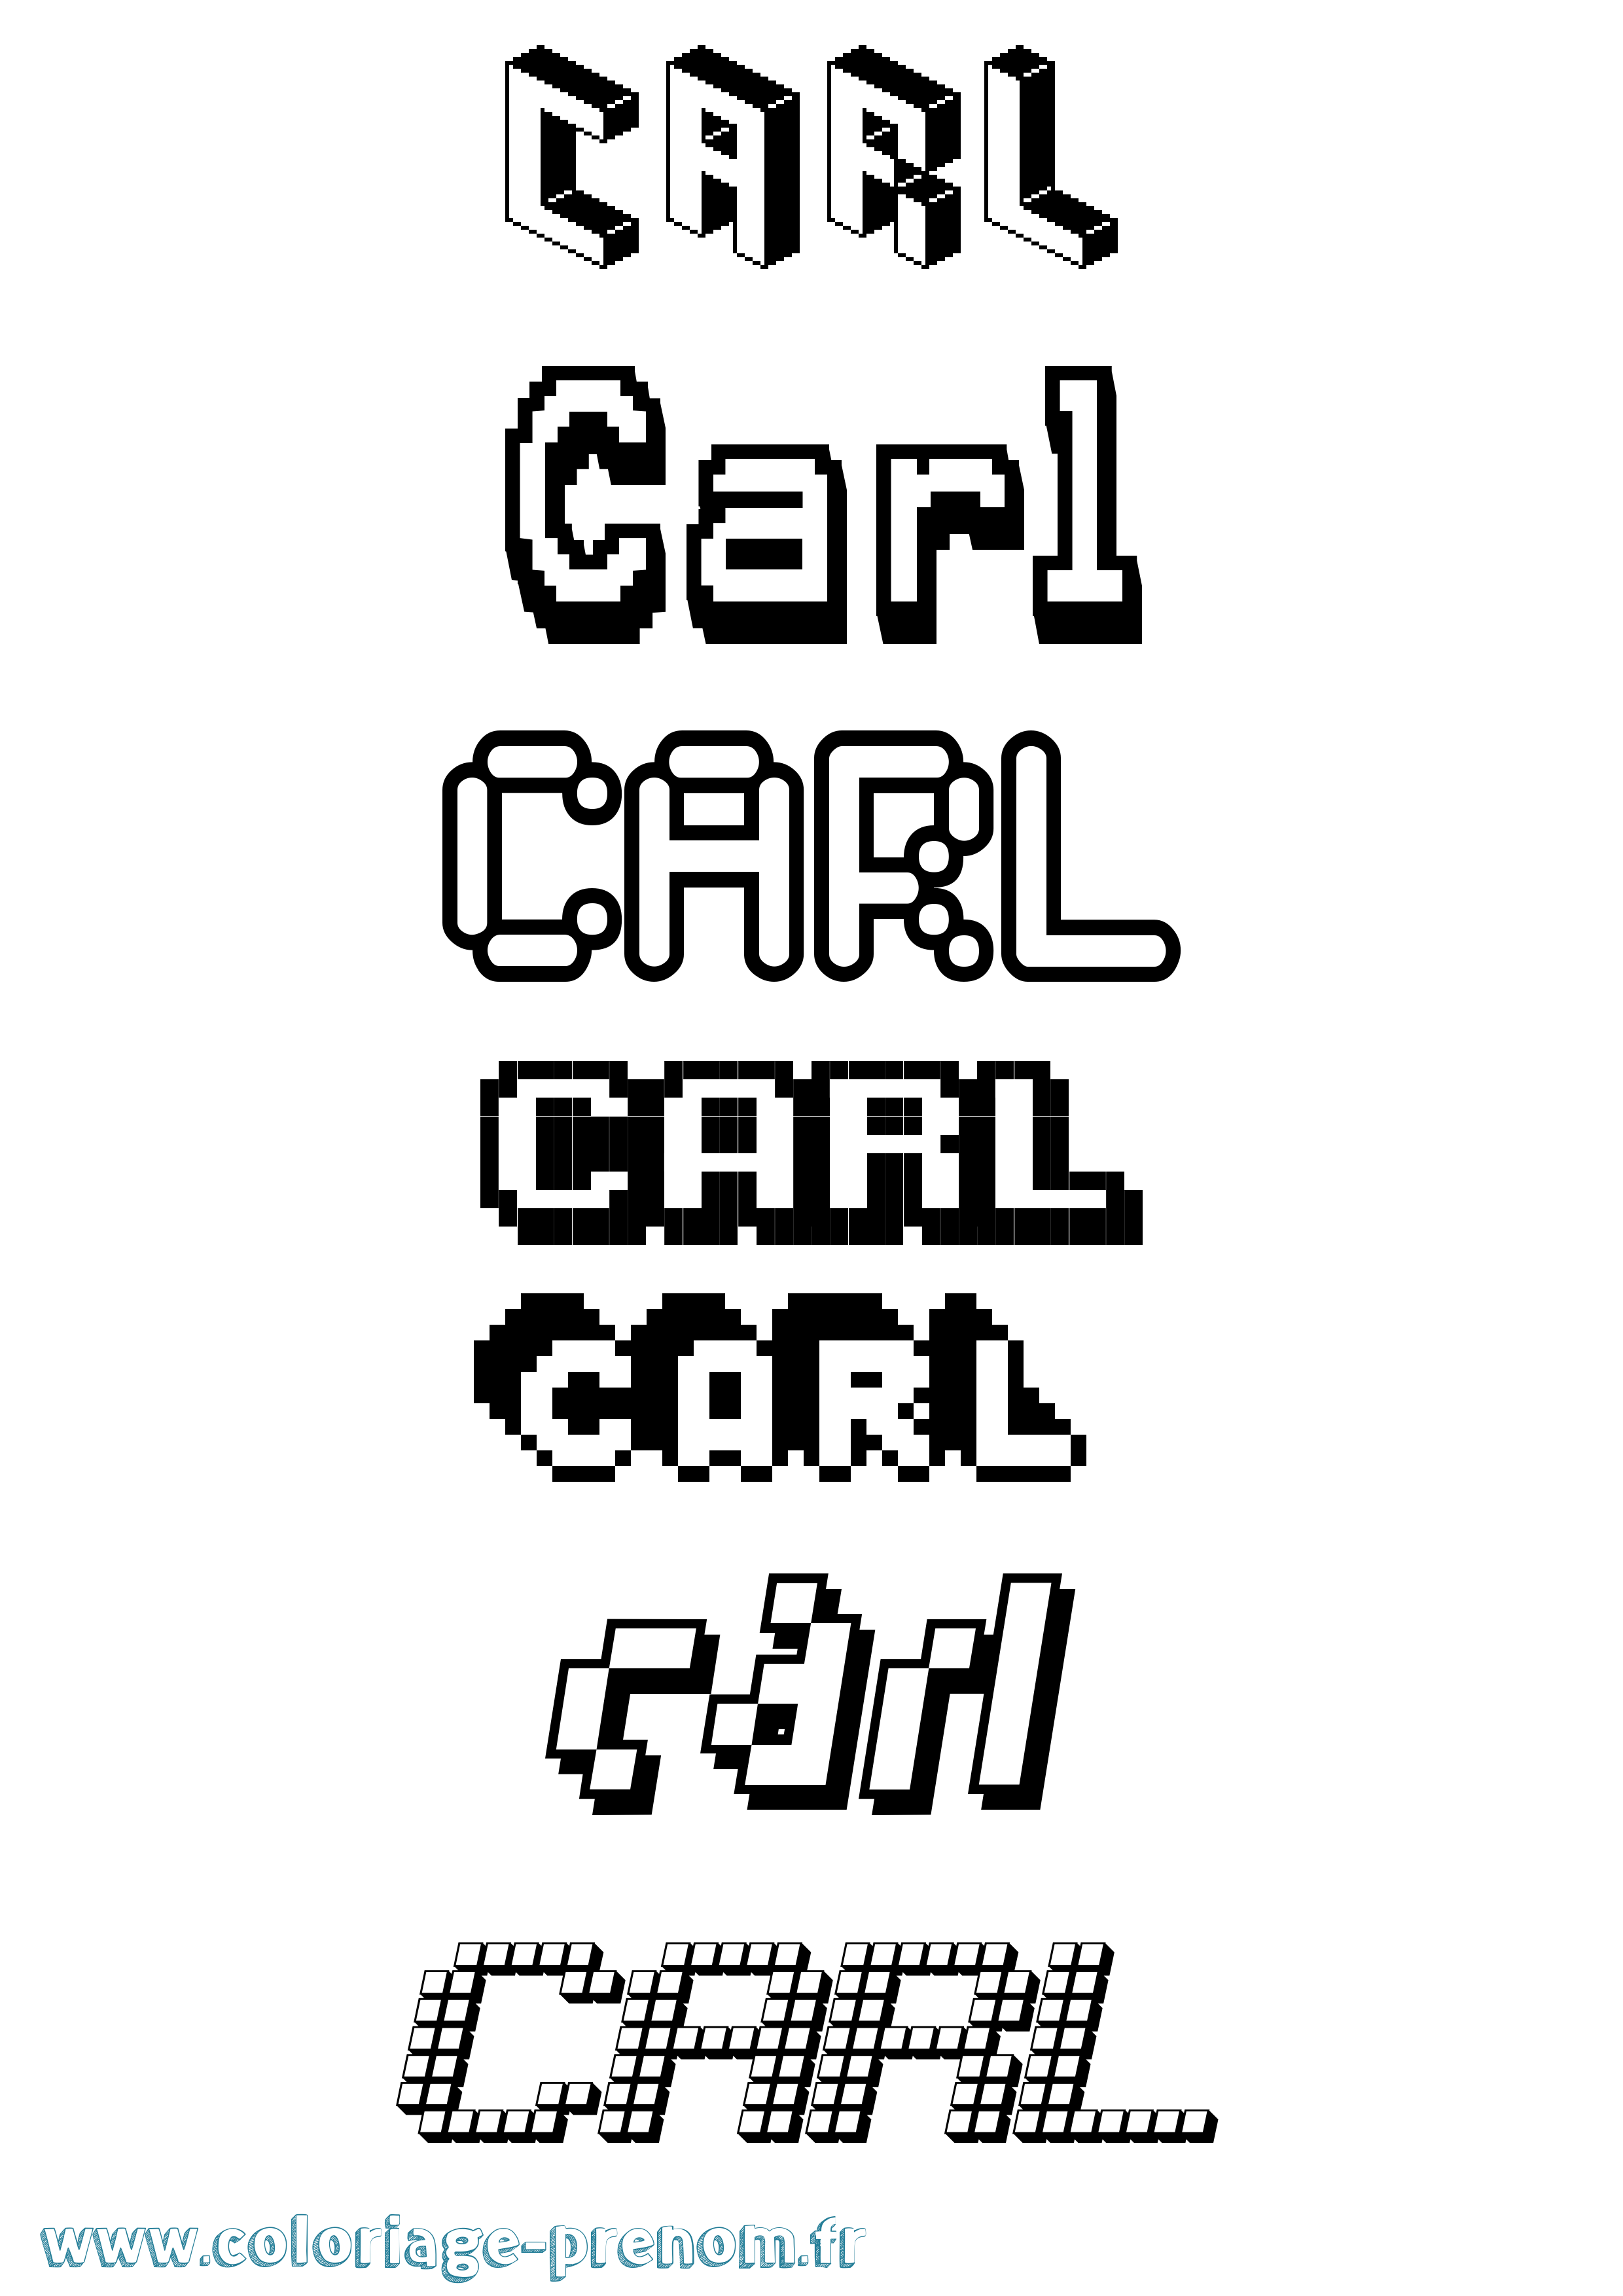 Coloriage prénom Carl Pixel